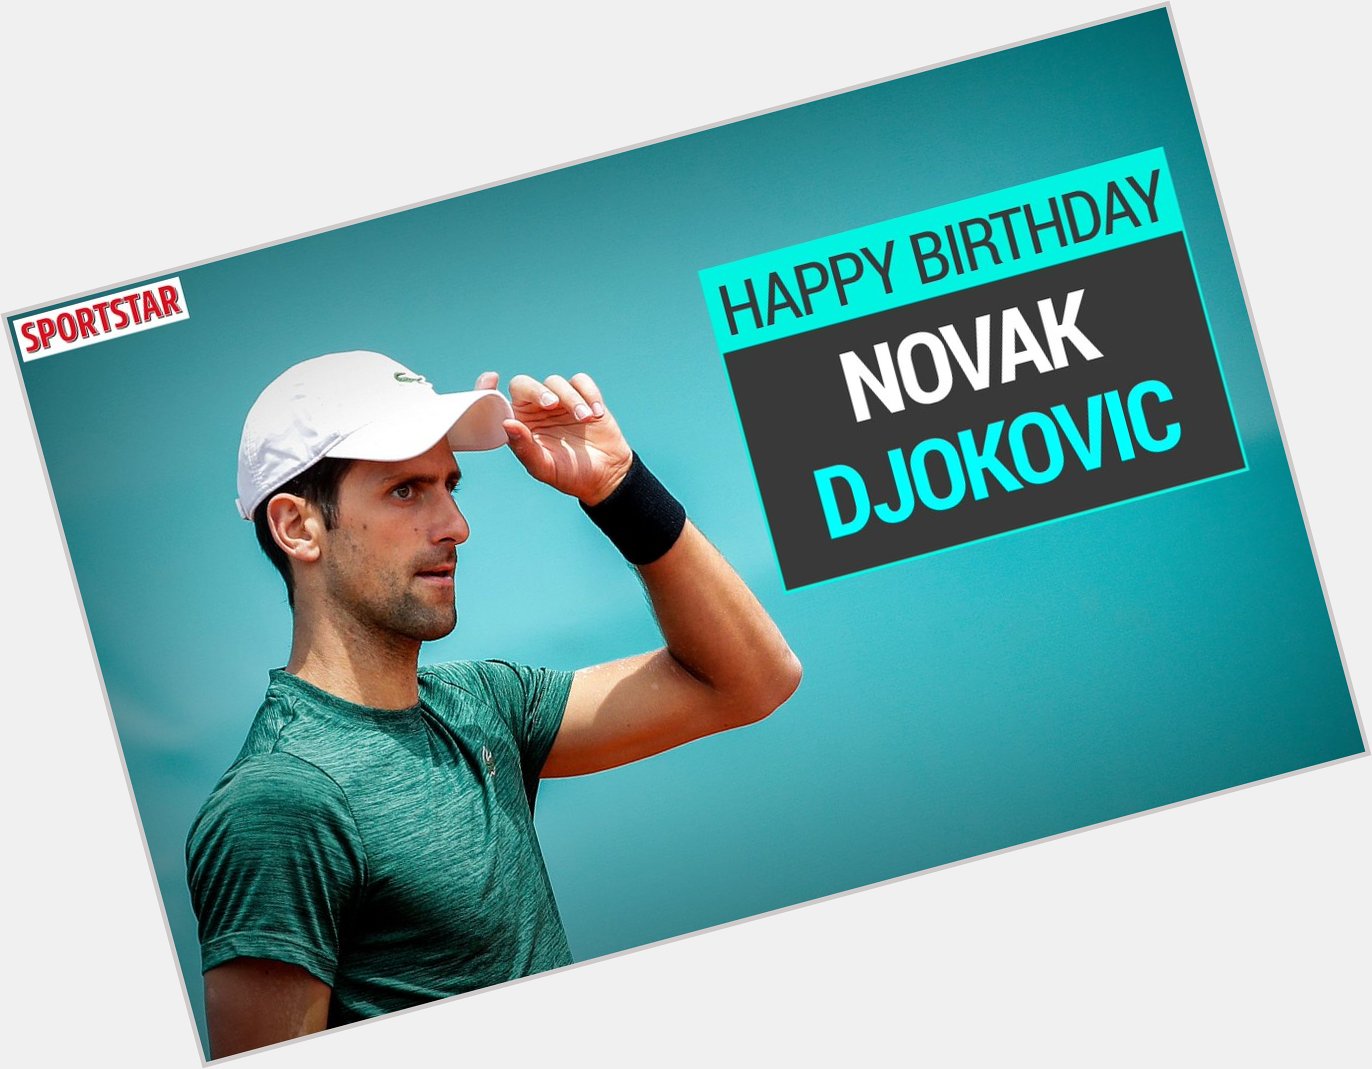 It\s birthday. Here\s wishing Novak Djokovic a happy birthday and a grand (slam) year. 